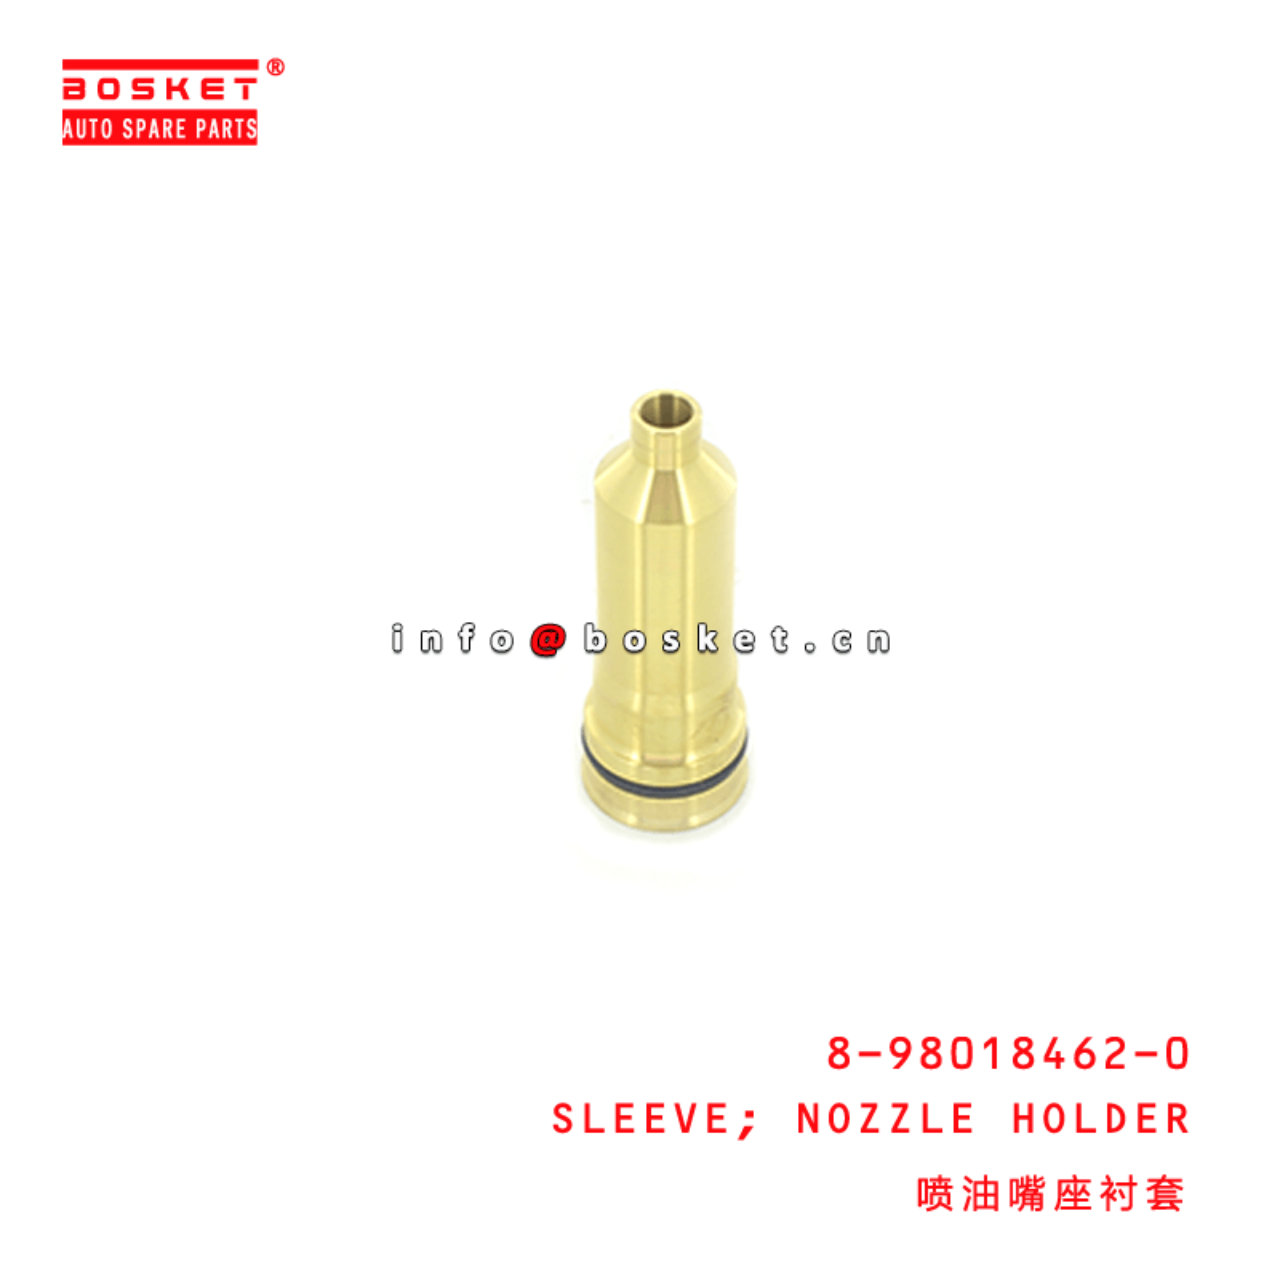 8-98018462-0 Nozzle Holder Sleeve 8980184620 Suitable for ISUZU FRR 6HK1 